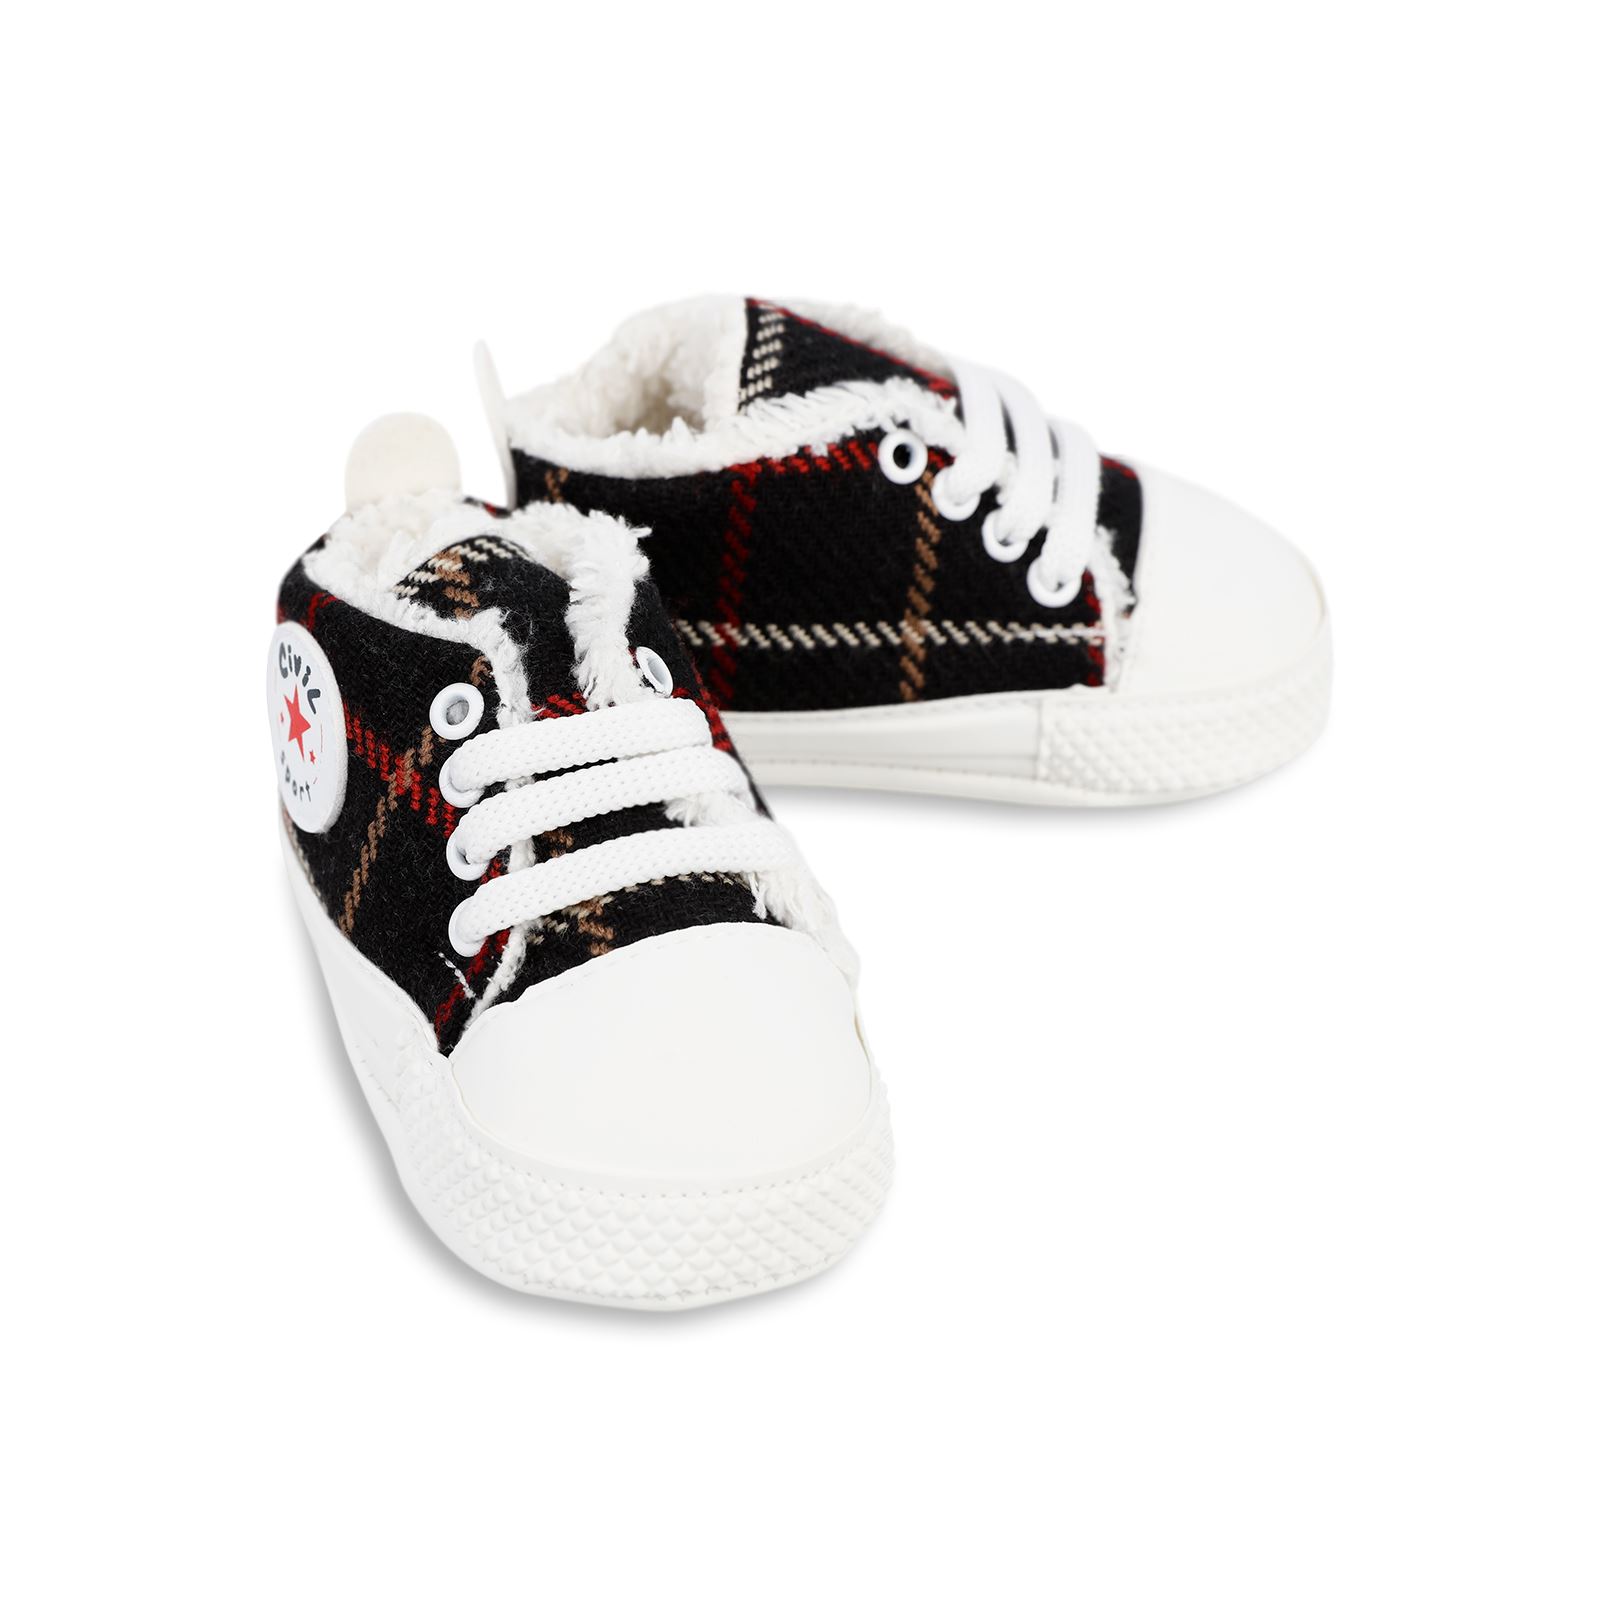 Civil Kız Bebek Patik Ayakkabı 17-19 Numara  Siyah